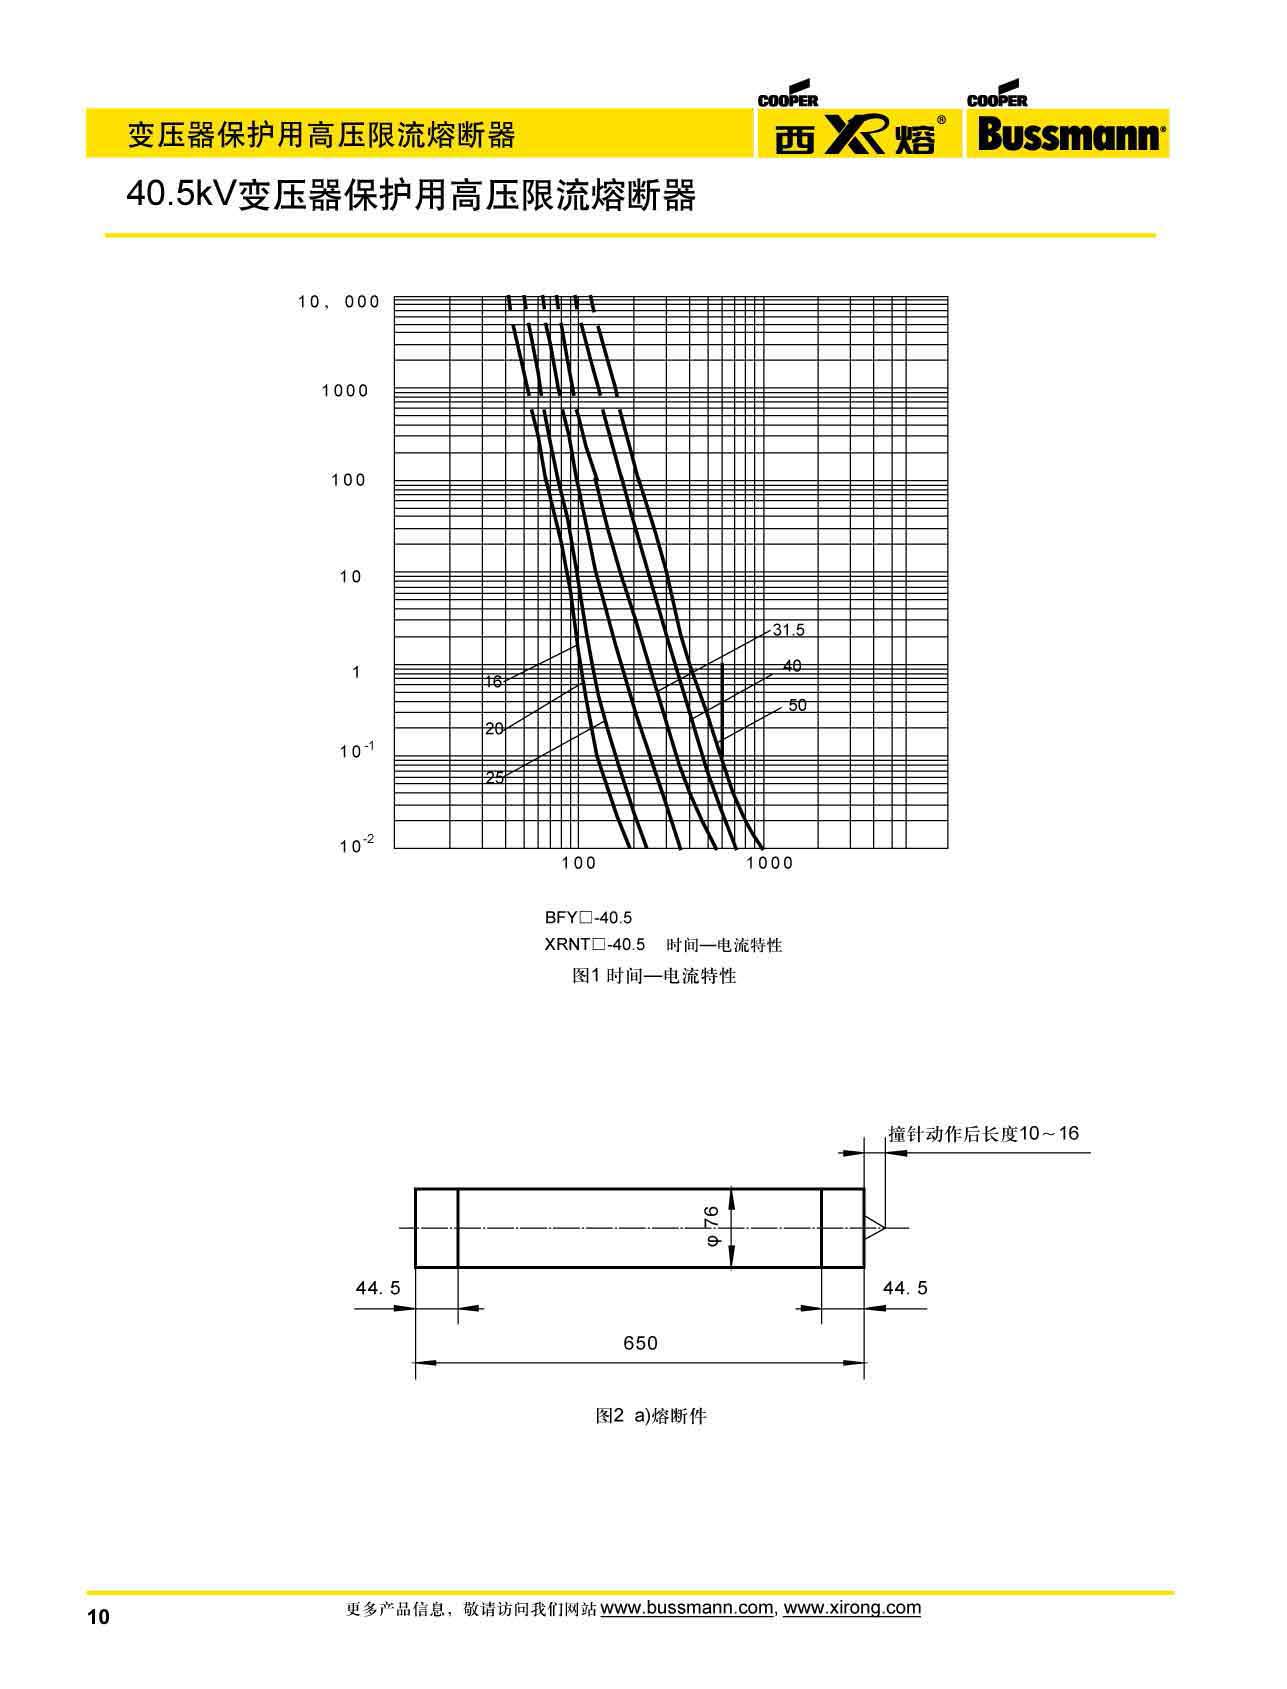 40.5kV变压器保护用高压限流熔断器曲线图